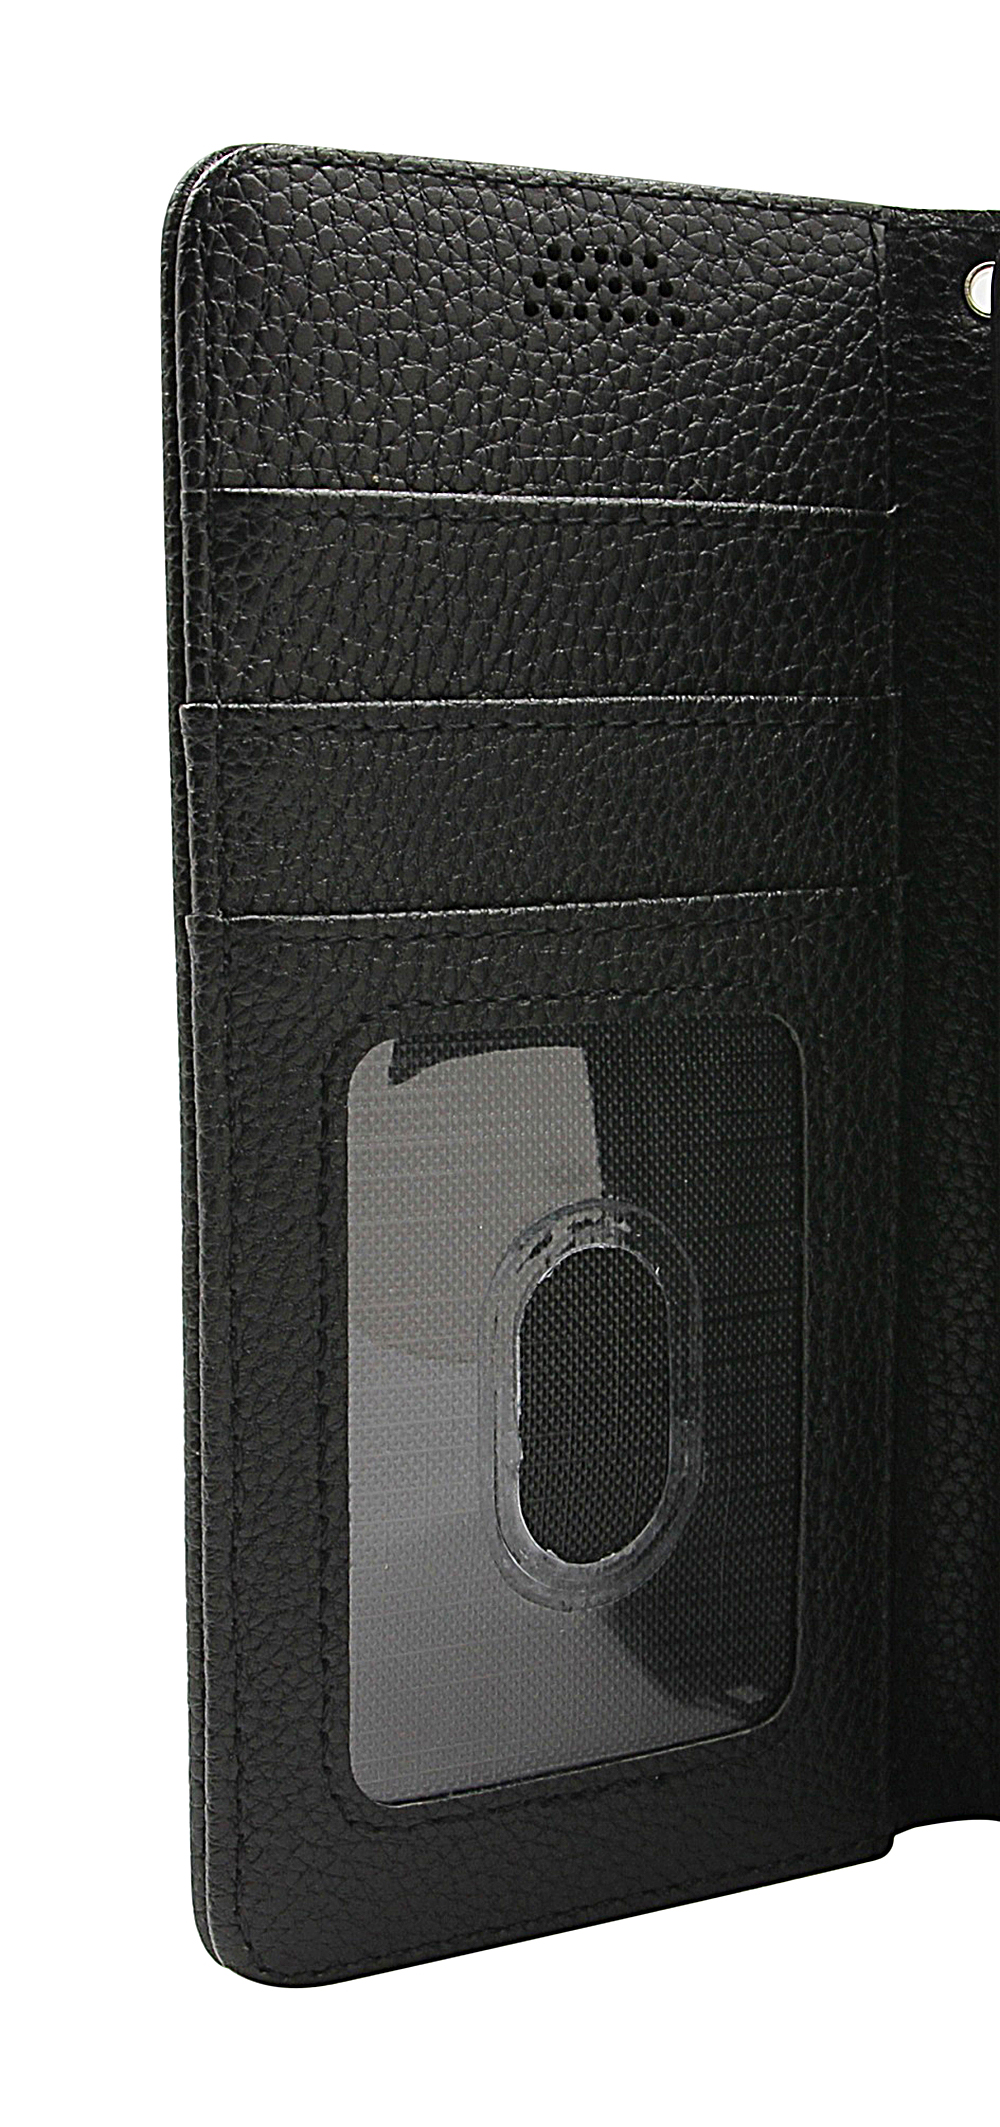 New Standcase Wallet Motorola Edge 20